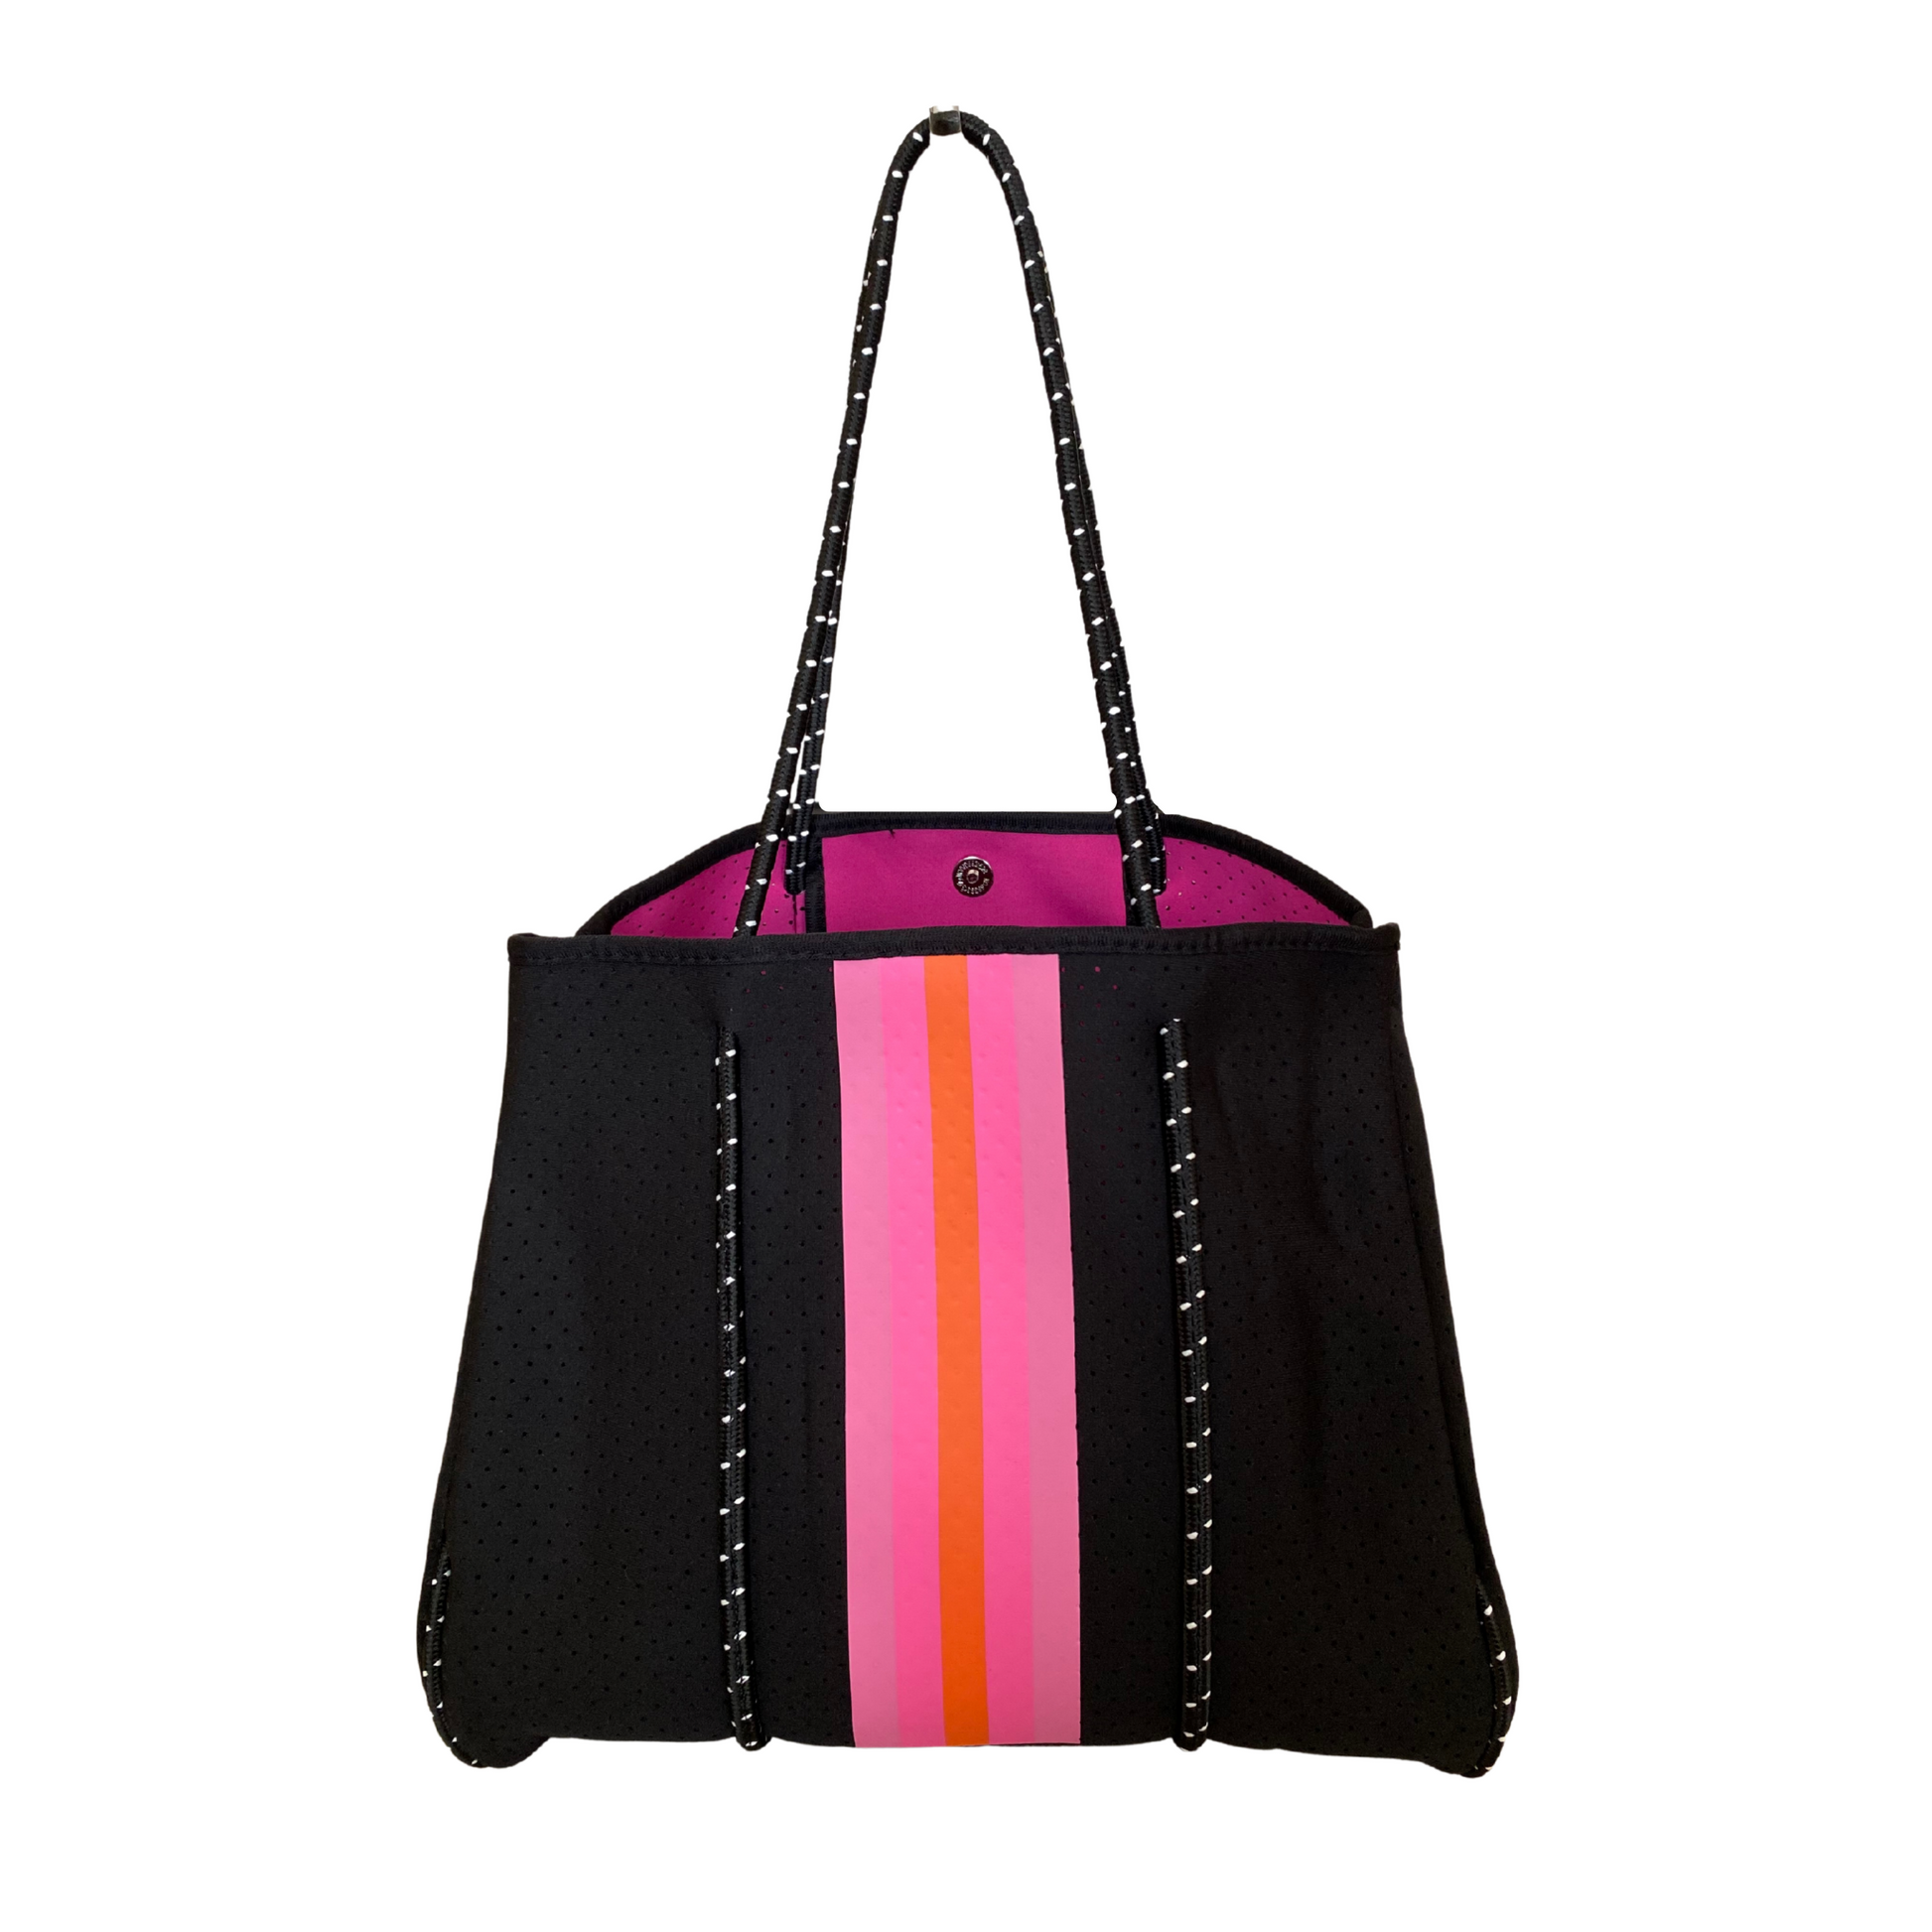 Black and Pink Neoprene Tote Bag, Neoprene Tote Bag, Neoprene Tote, Neoprene Bag, Travel Bag, Beach Tote, Beach Bag, Bag, Neoprene Accessories, Accessories